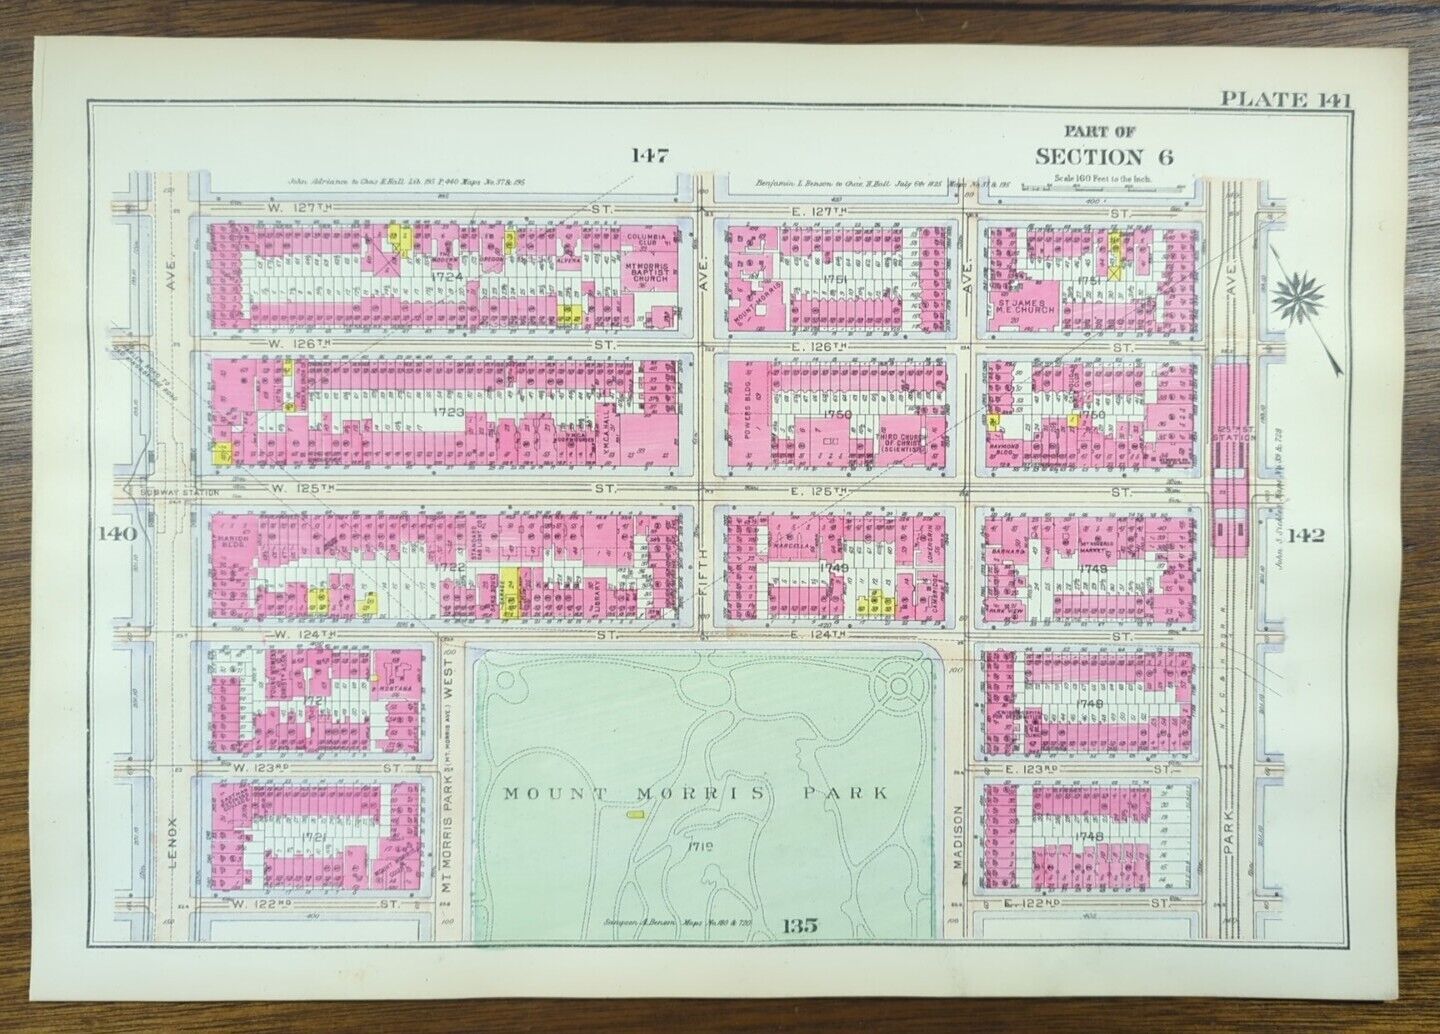 1916 MOUNT MORRIS PARK MANHATTAN NEW YORK CITY Street Map ~ 127th St - 122nd St